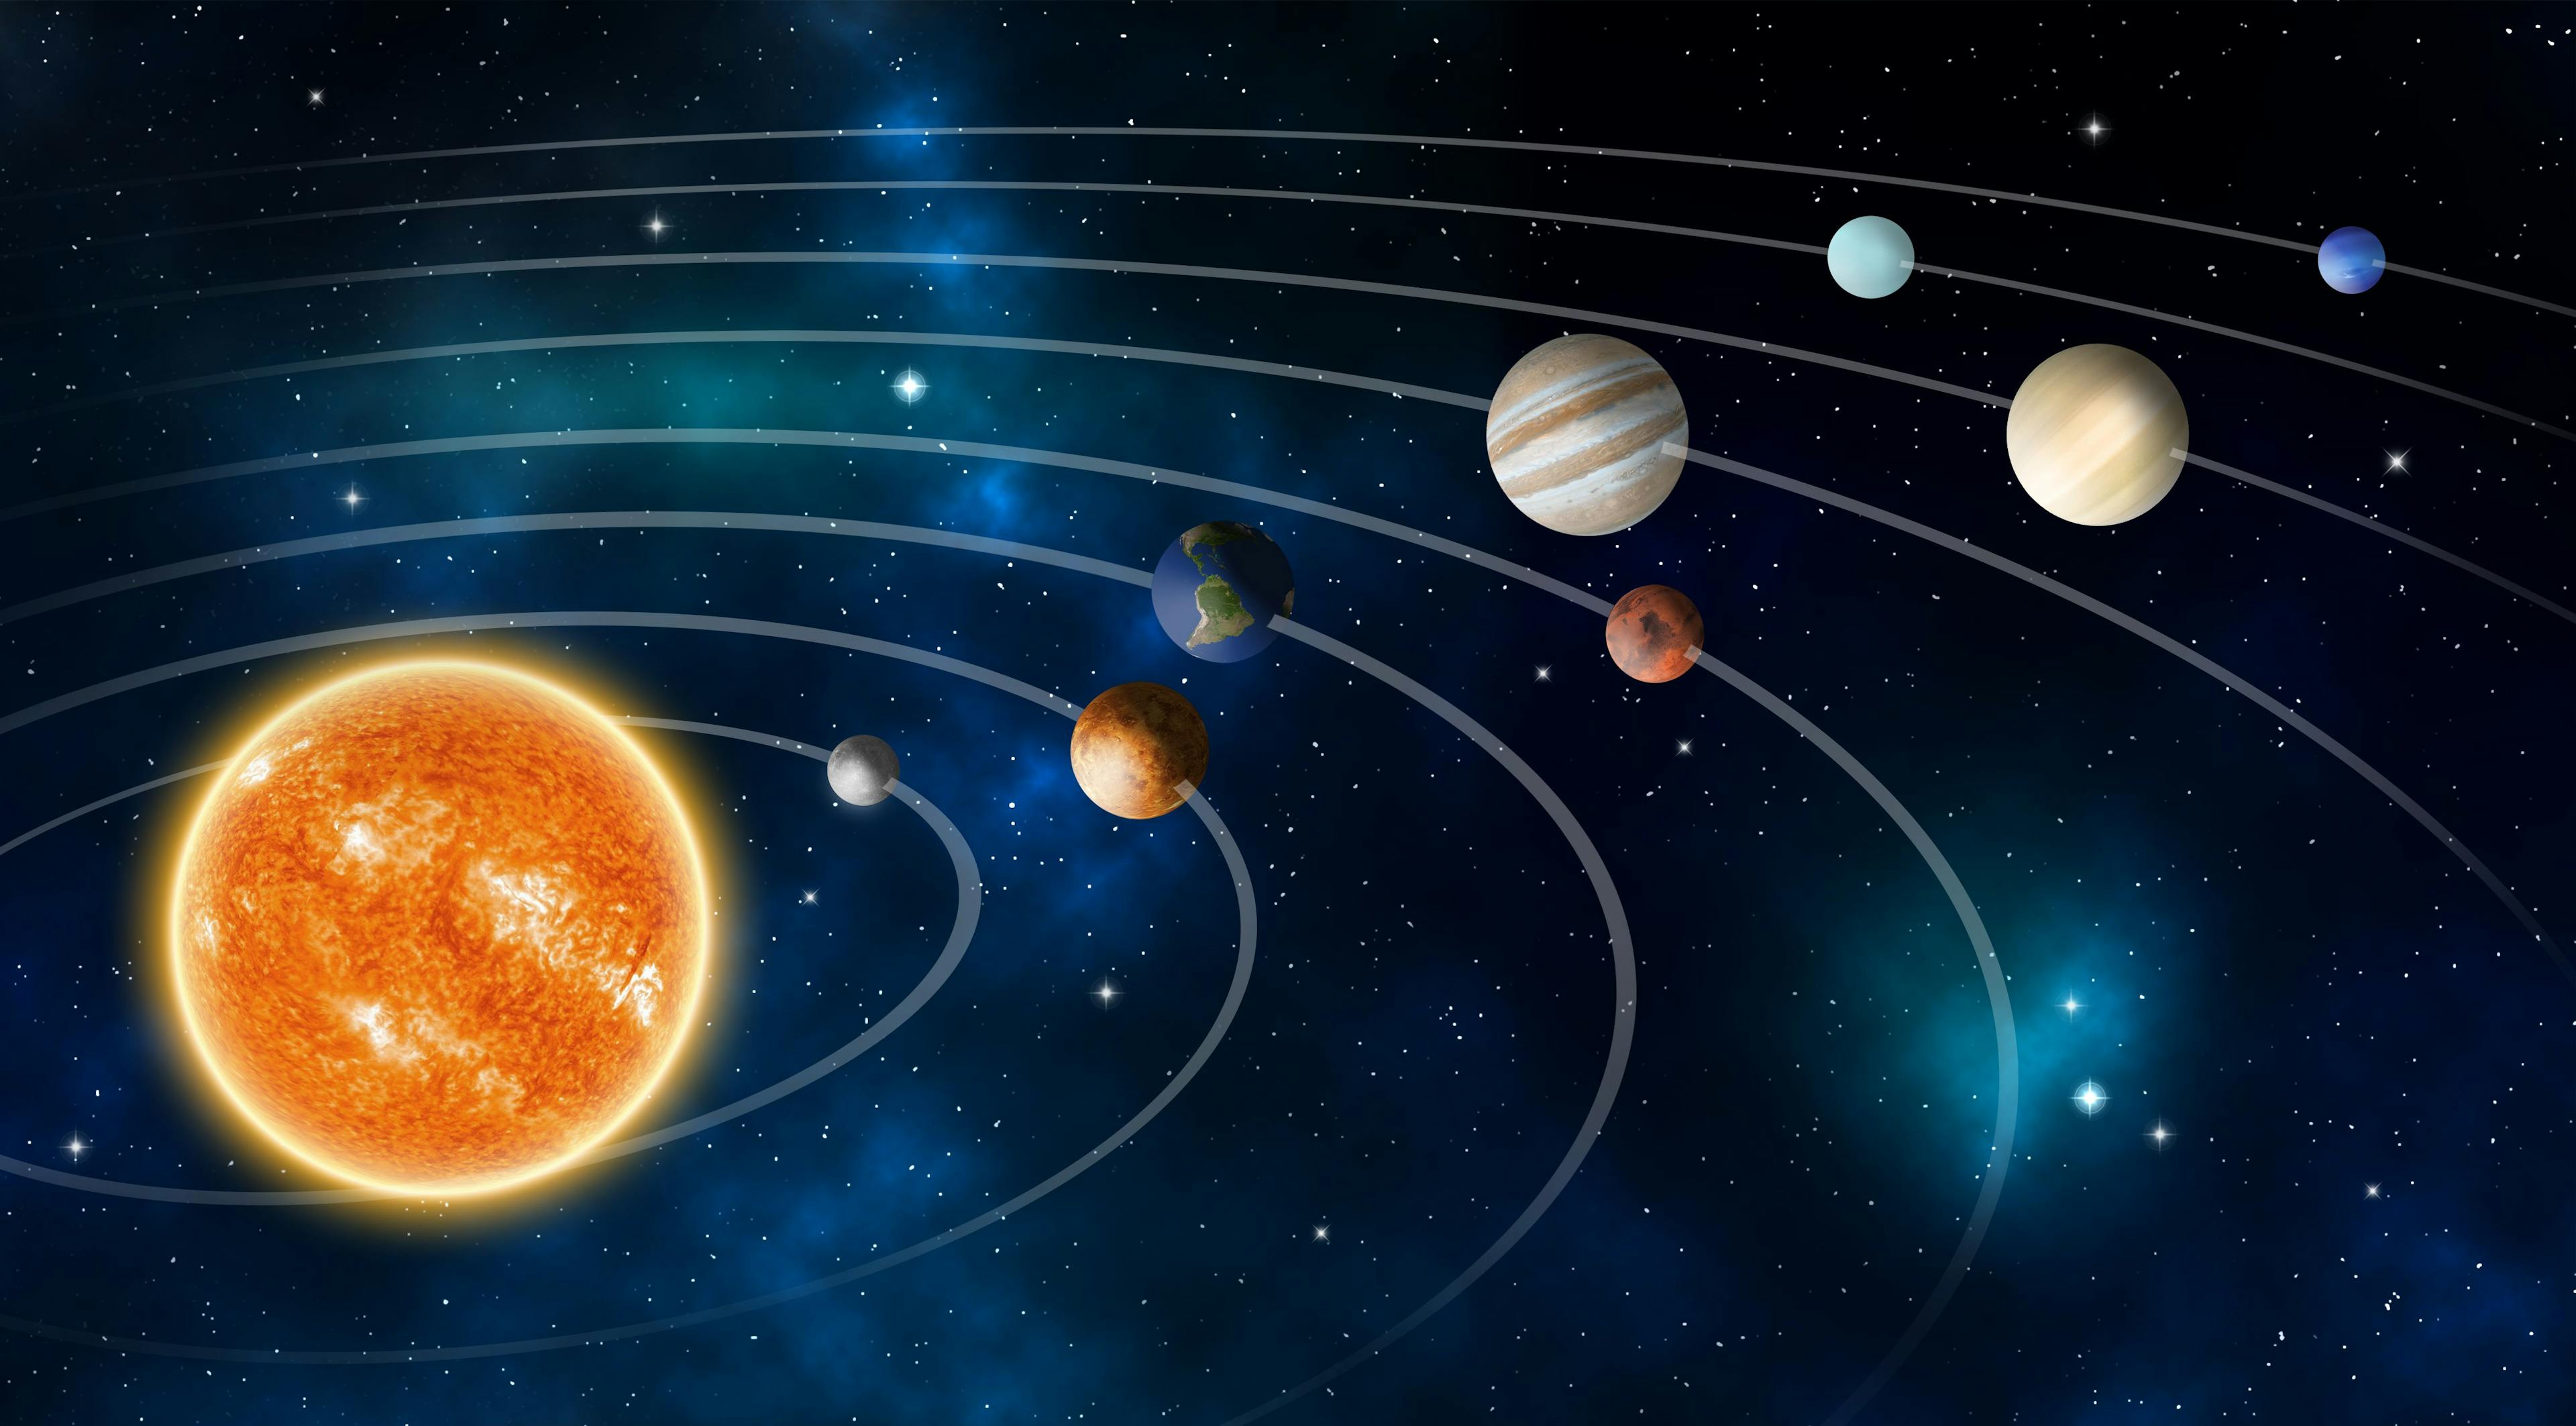 solar system | Image credit: WithanTor - stock.adobe.com